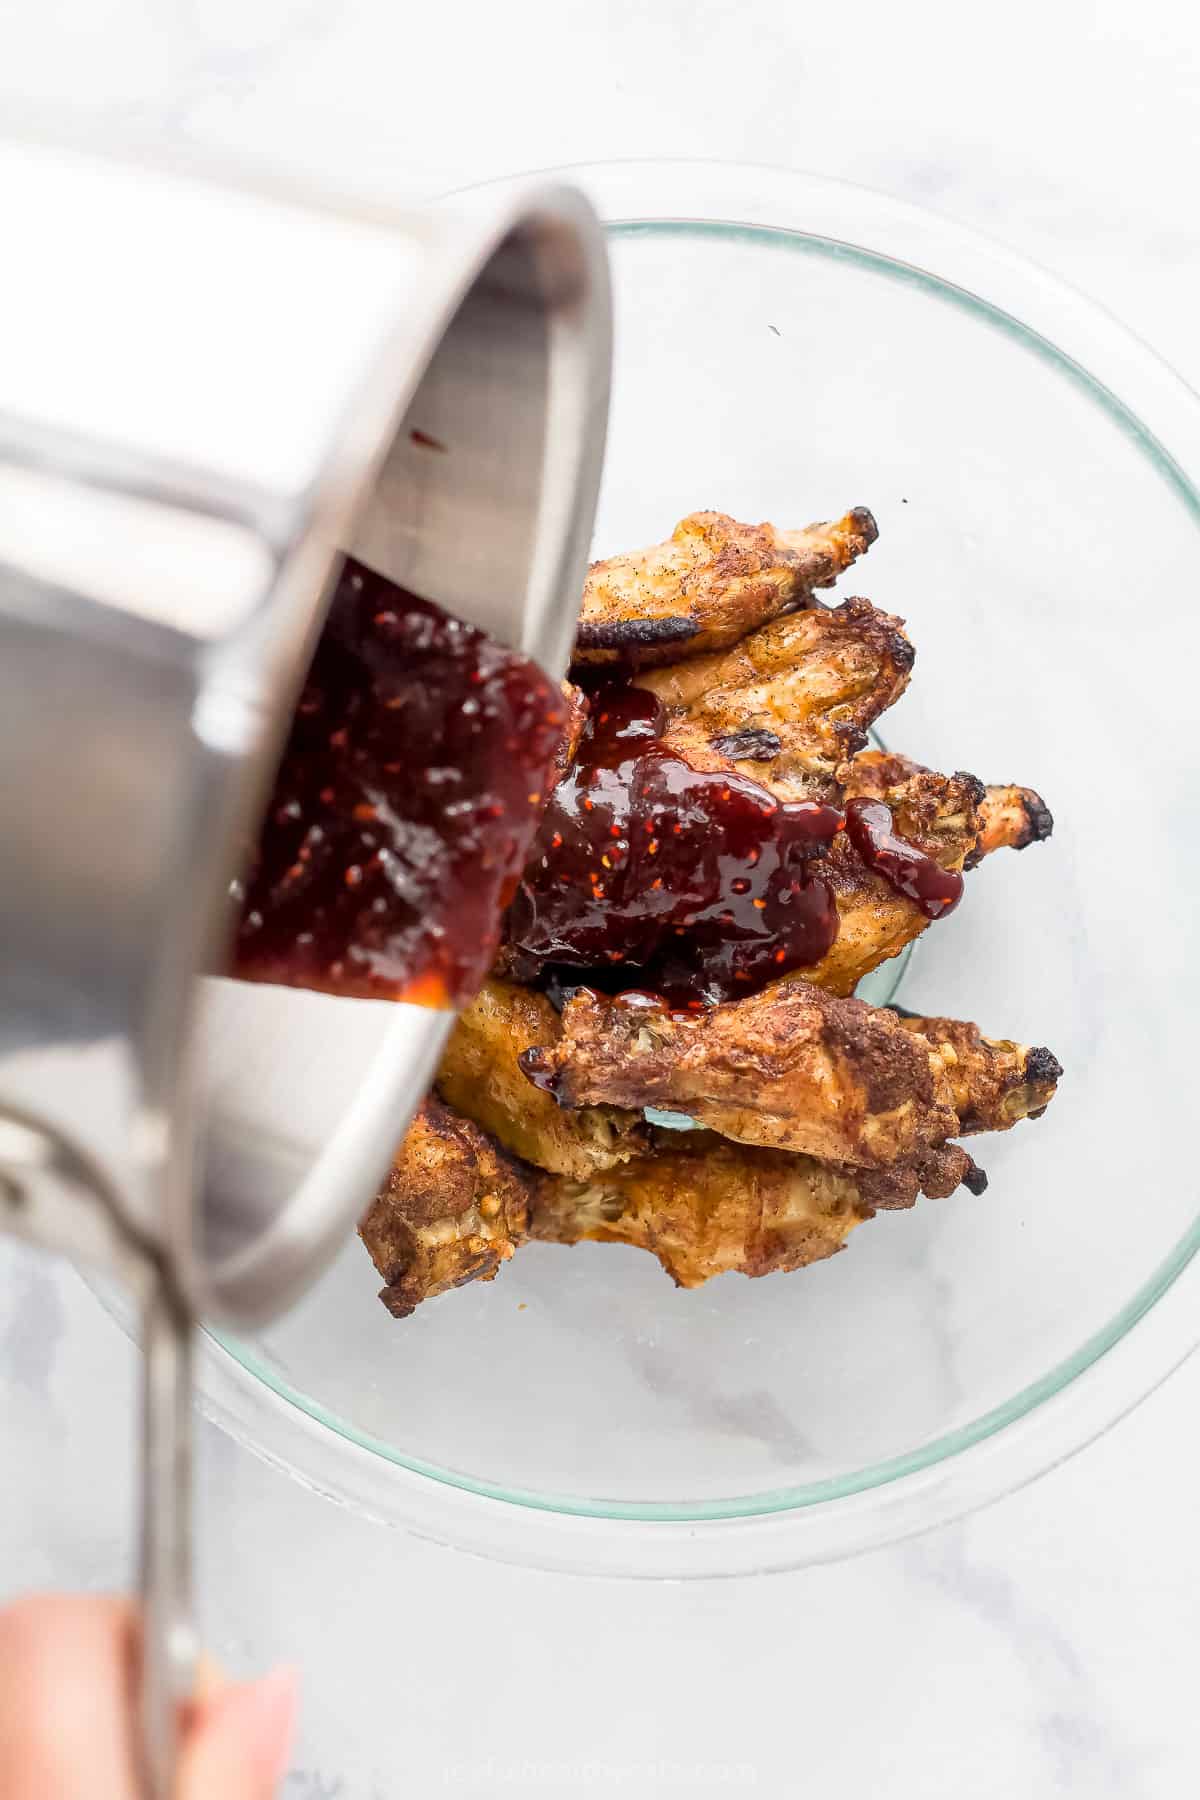 raspberry hoisin glaze being poured over baked chicken wings